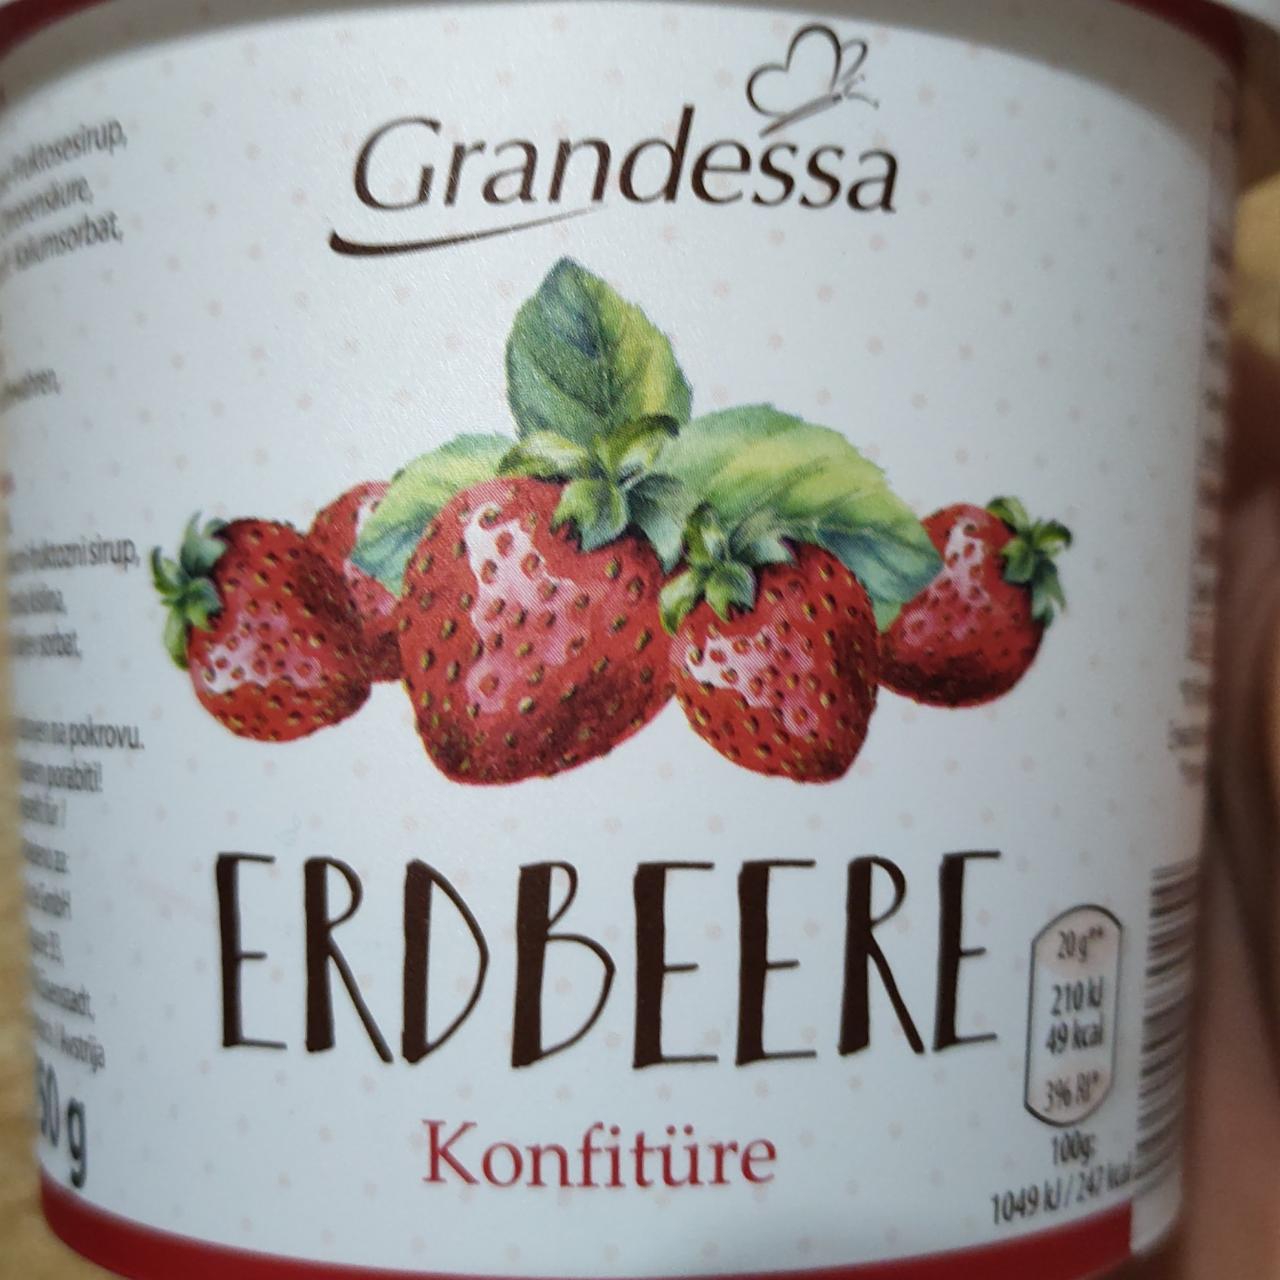 Fotografie - Erdbeere Grandessa